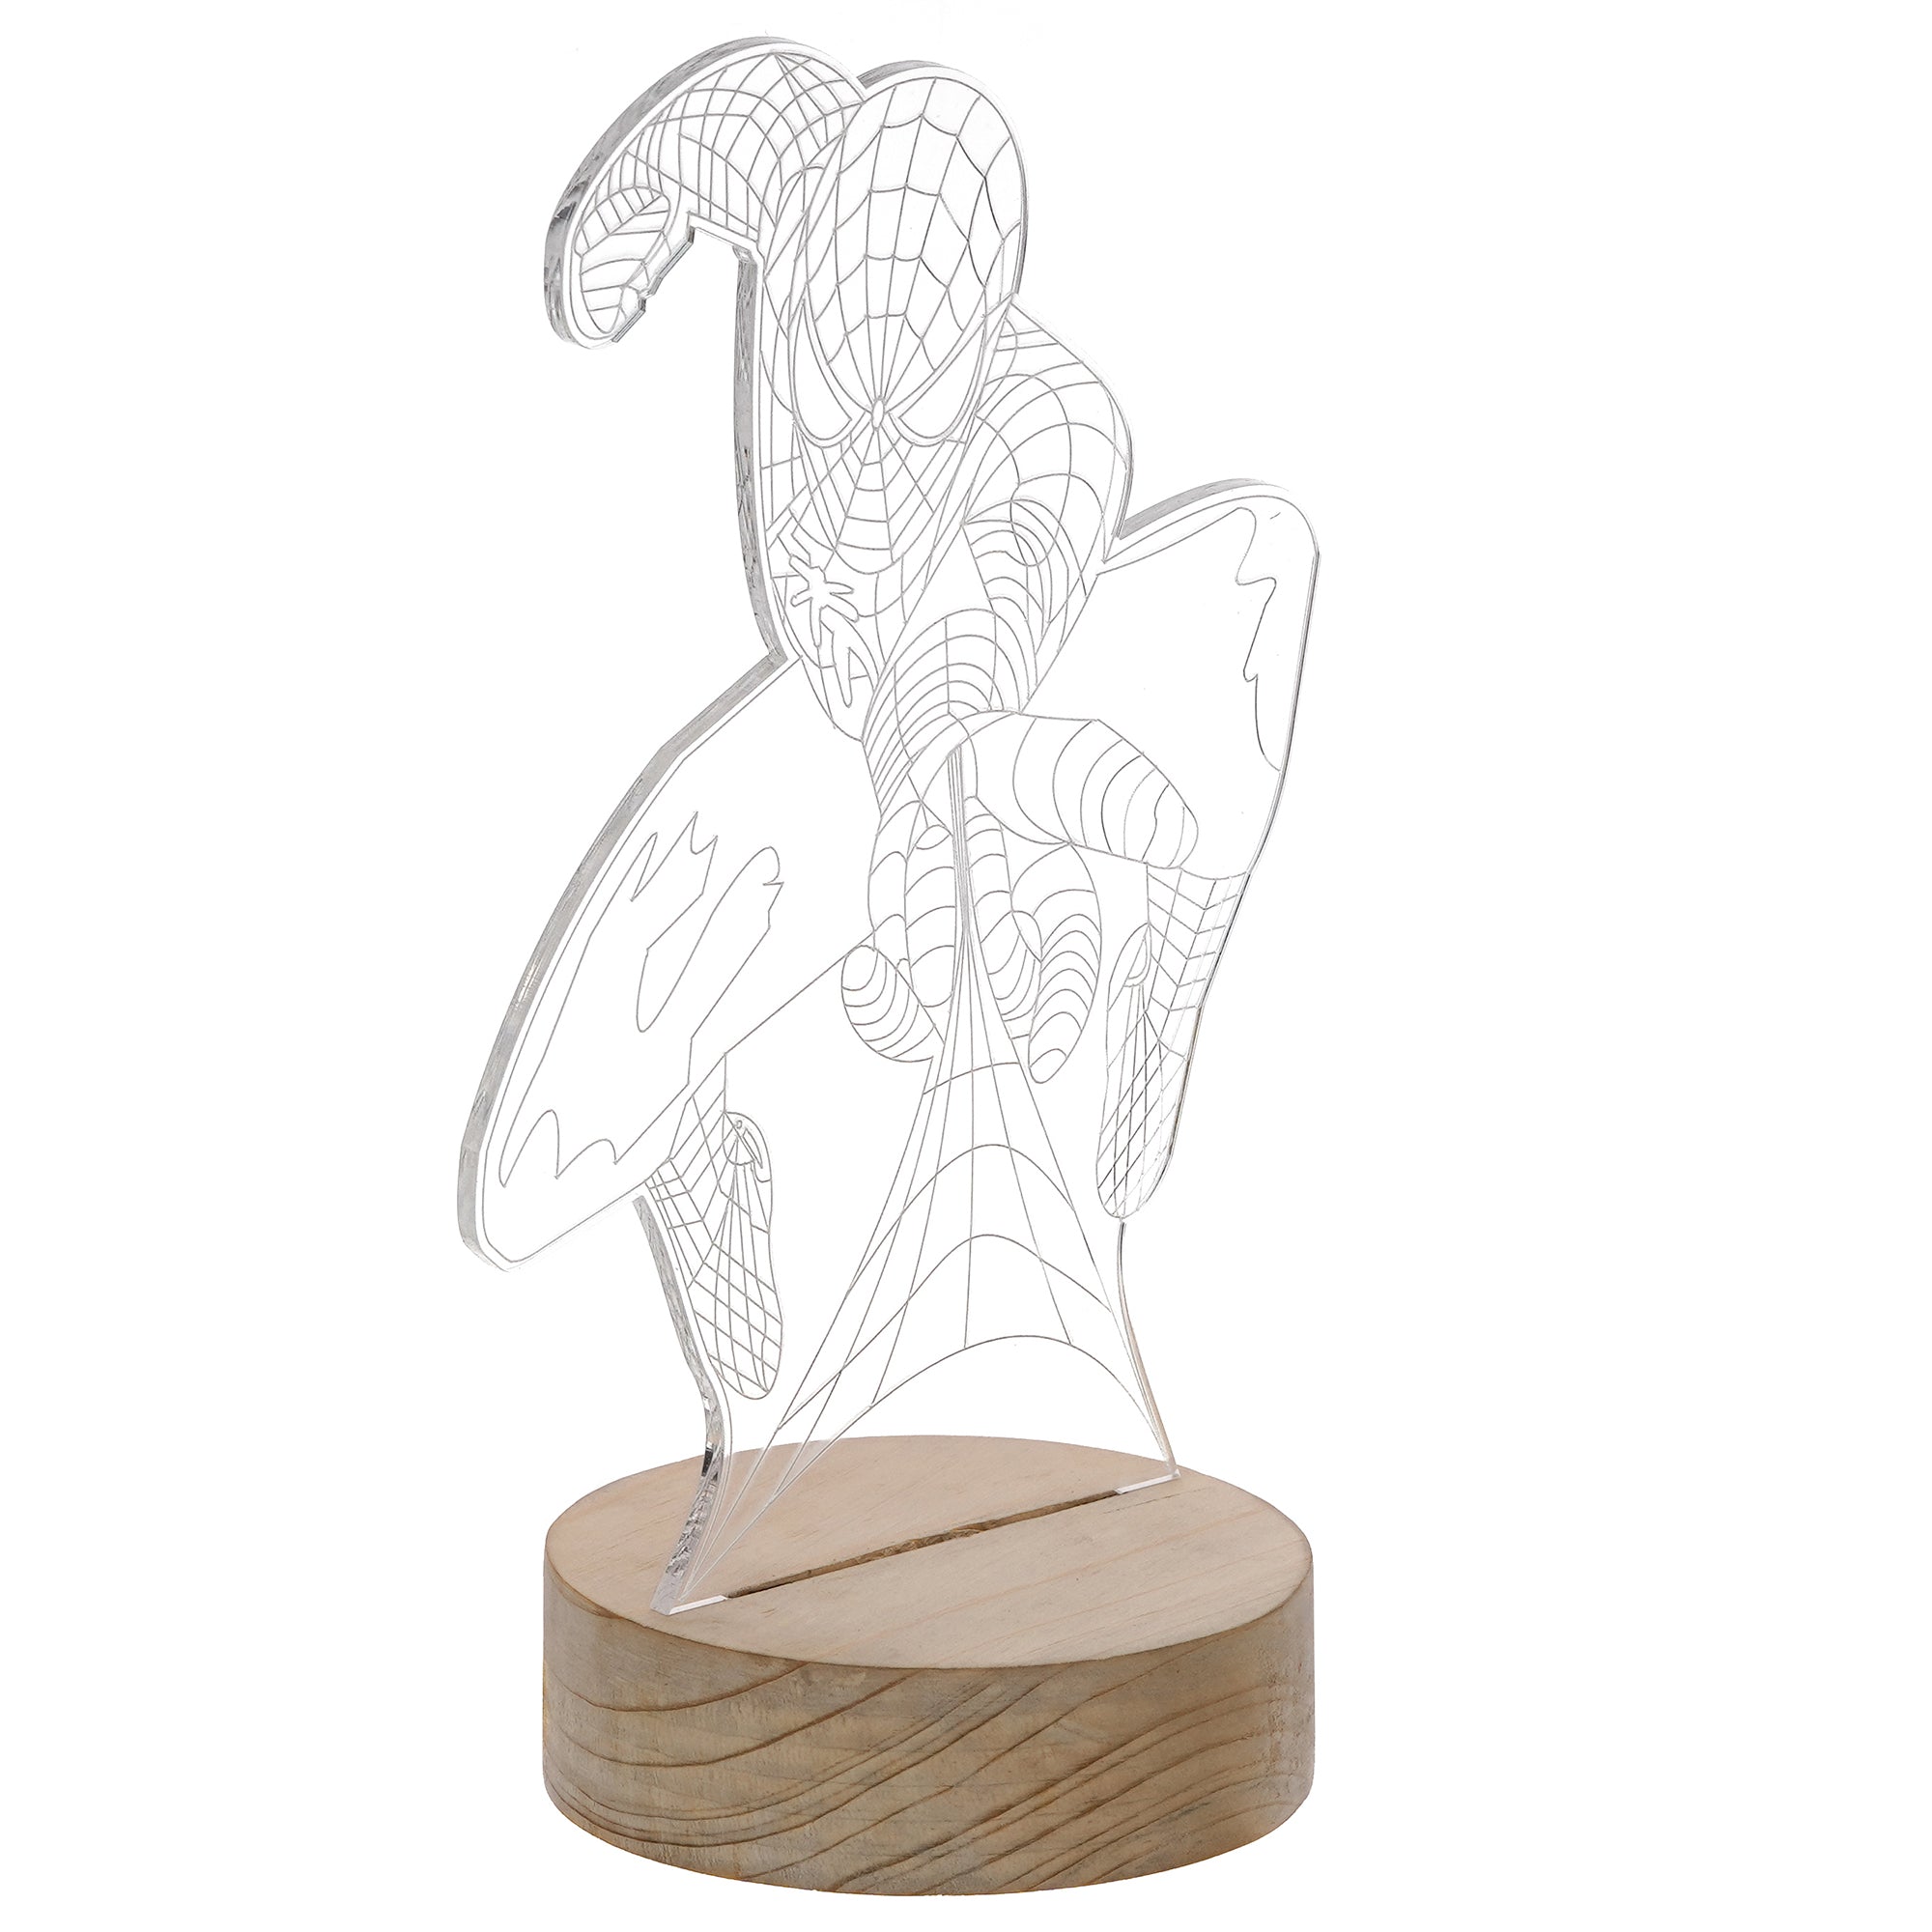 Spiderman Design Carved on Acrylic & Wood Base Night Lamp 4